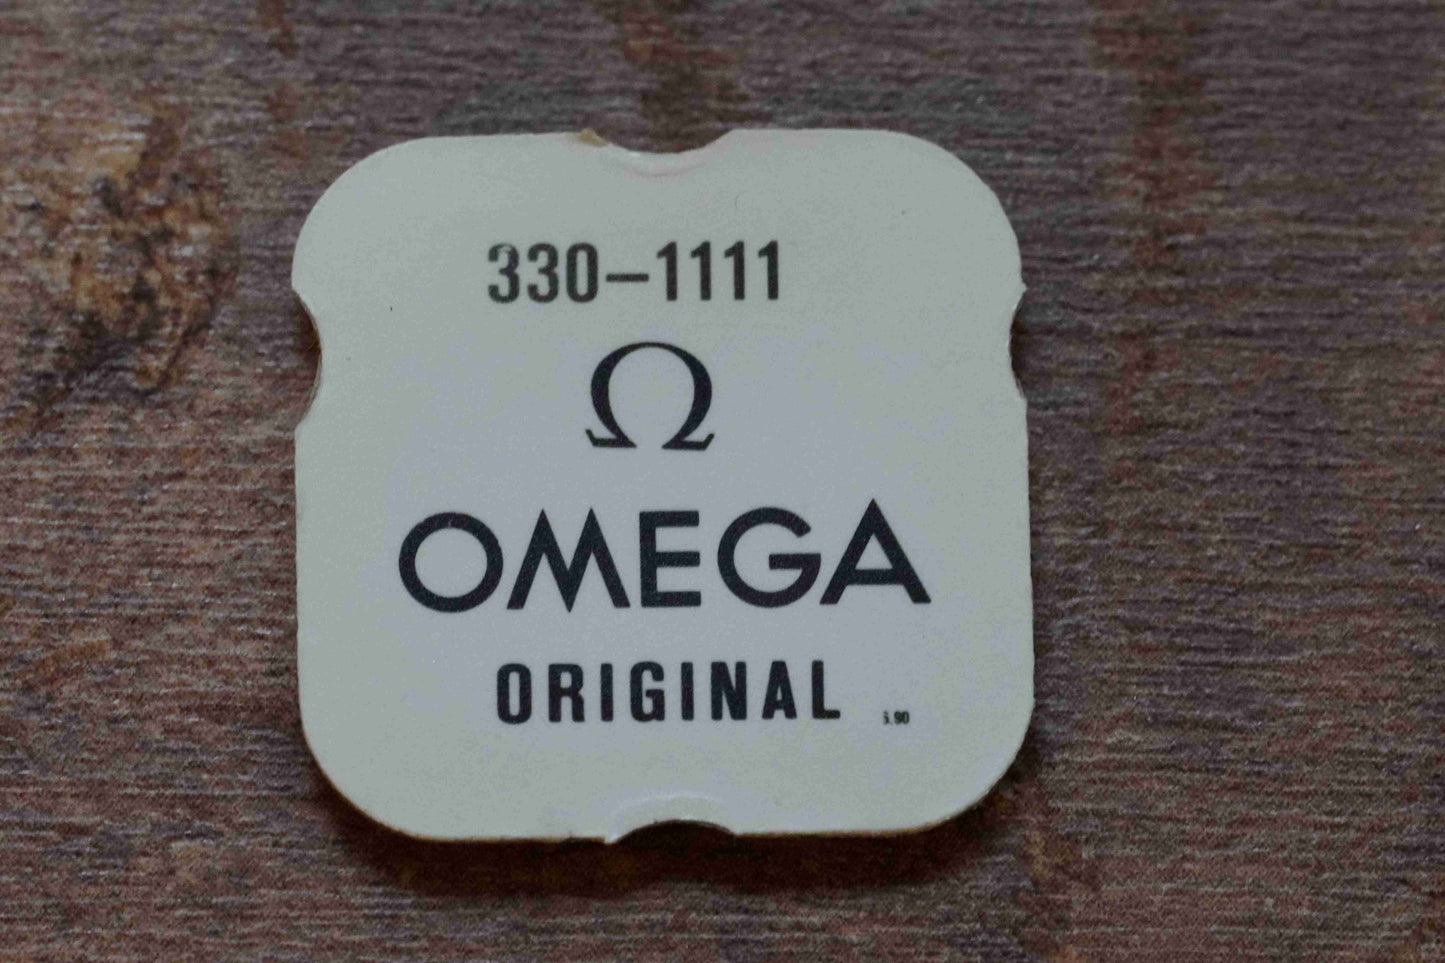 Omega cal 330 part 1111 Yoke